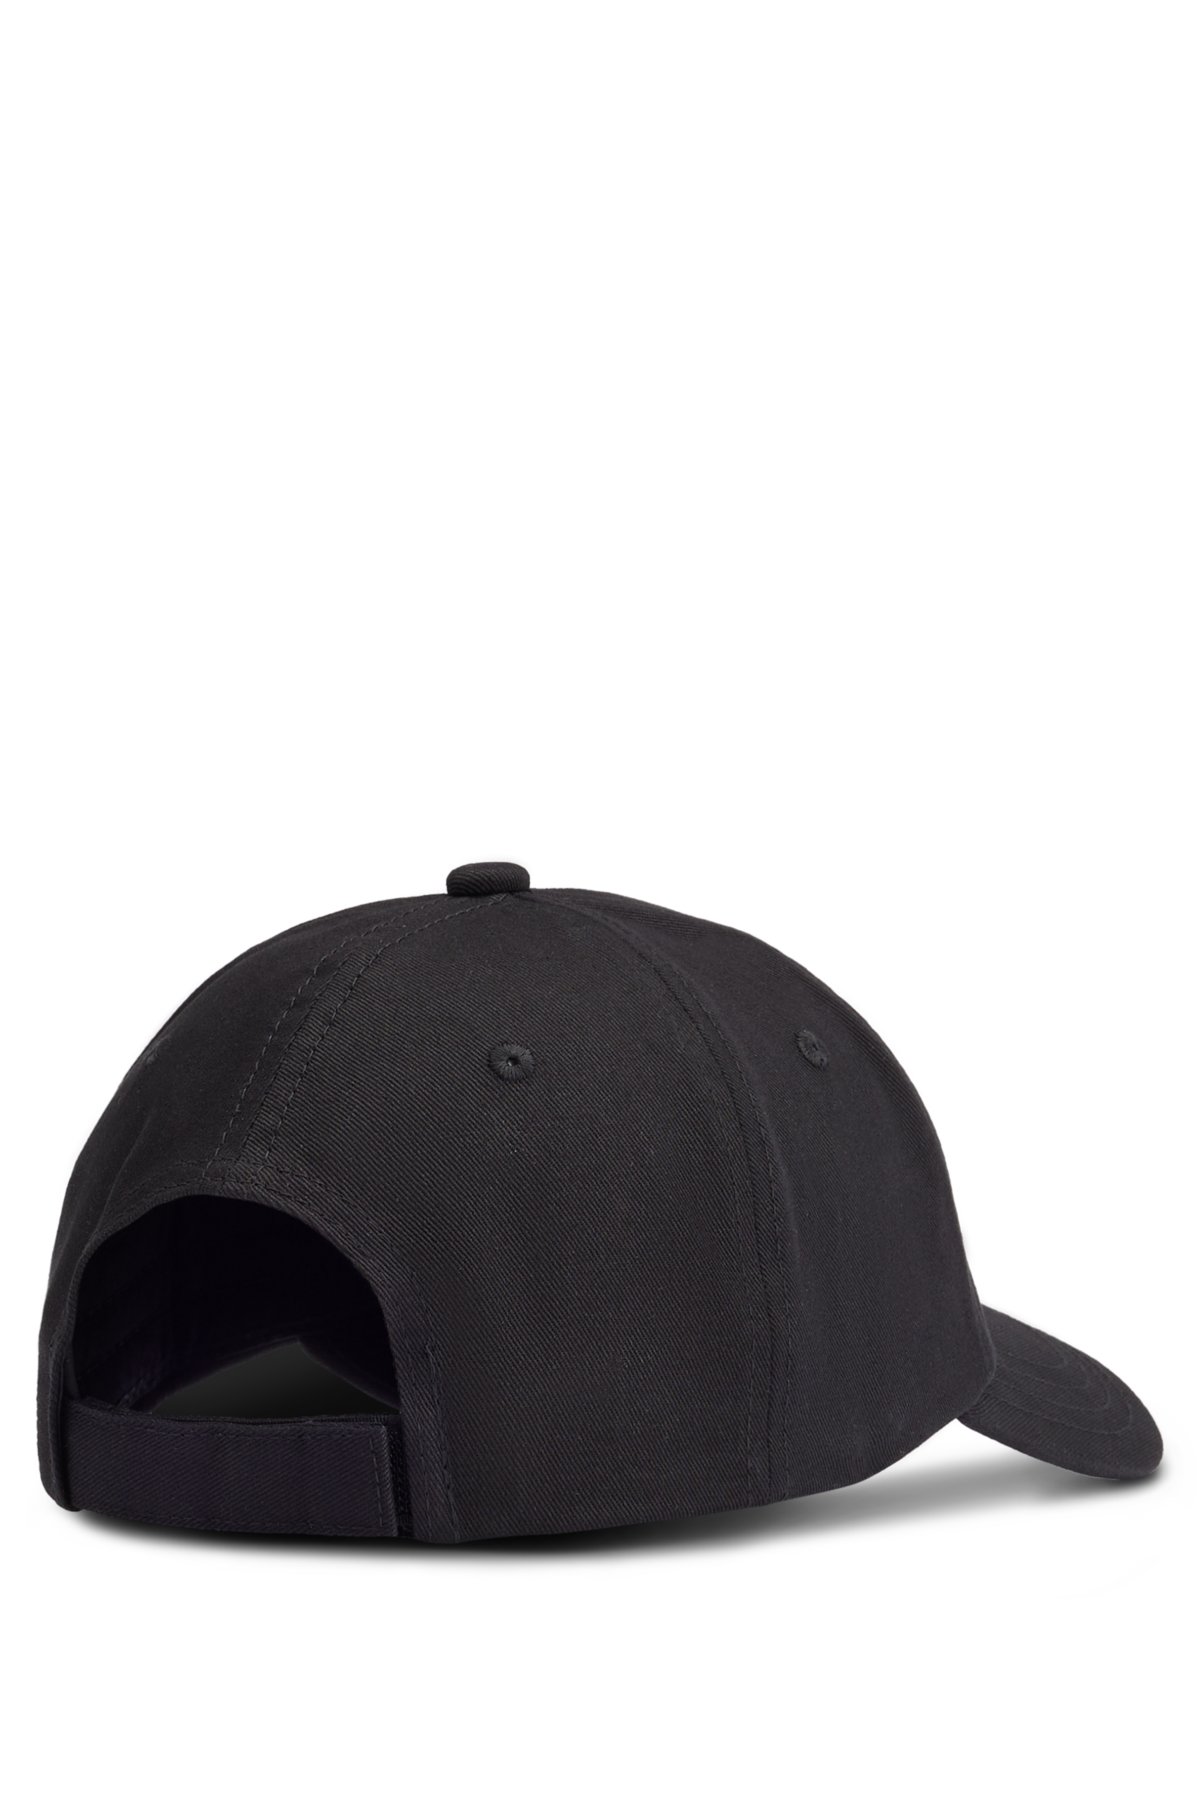 Cotton-twill cap with tonal logo patch, Black